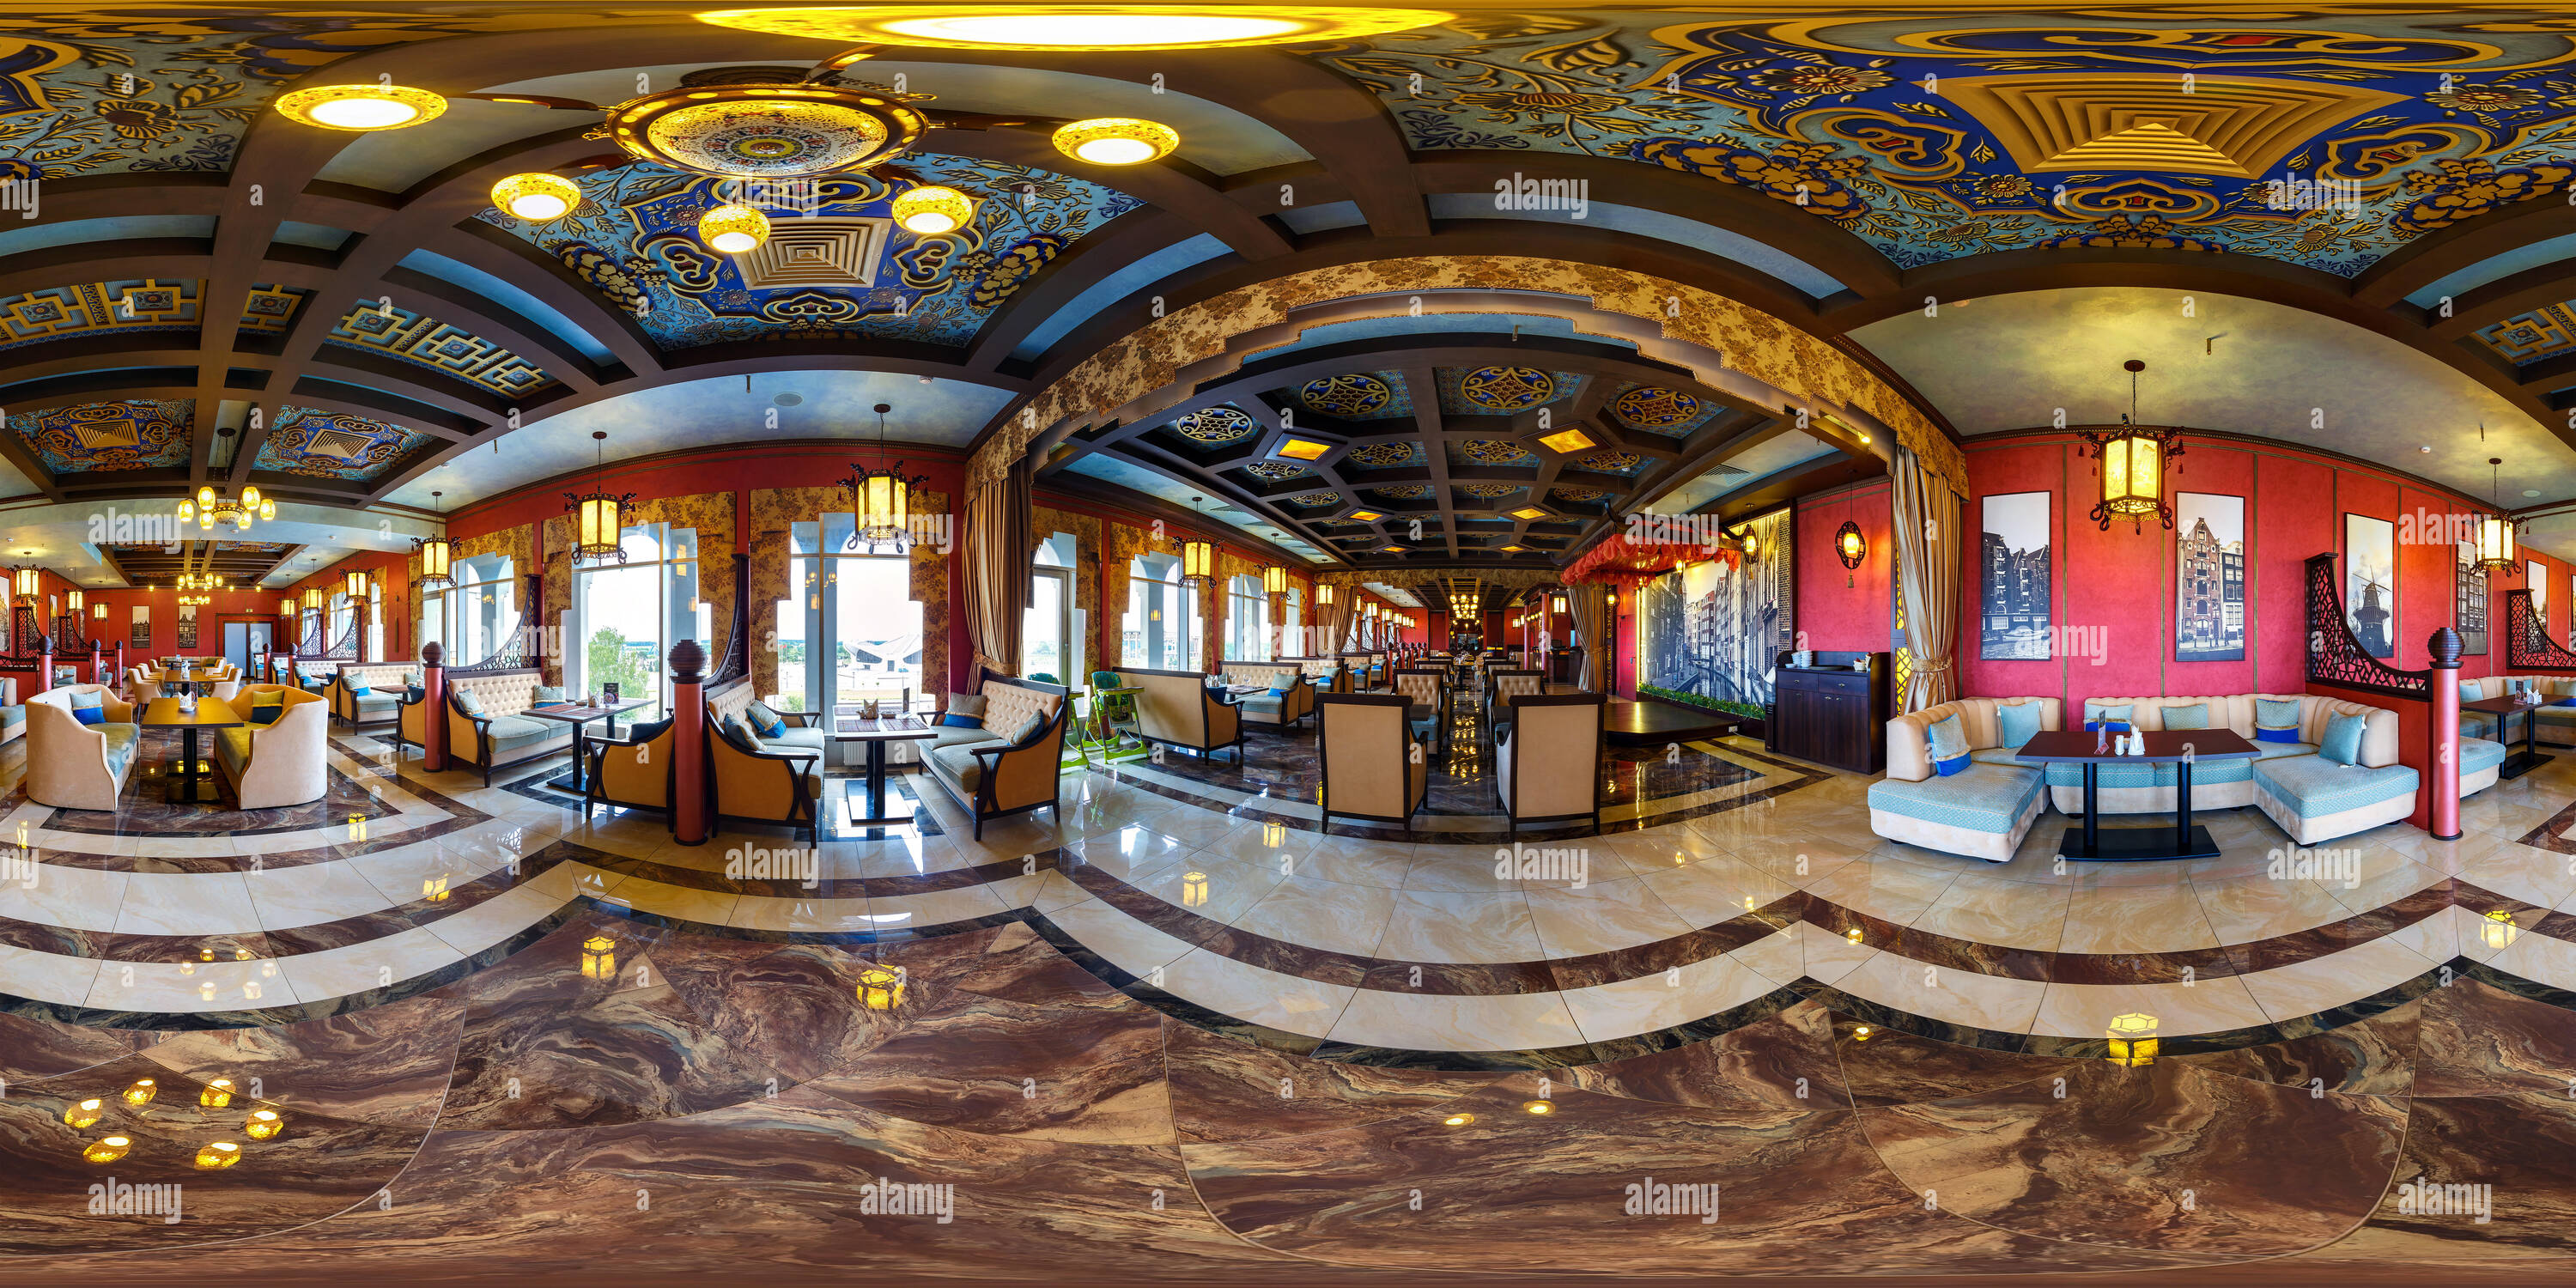 360 degree panoramic view of MINSK, BELARUS - NOVEMBER 11, 2015: Full 360 degree panorama in equirectangular spherical projection in interier stylish restaurant Amsterdam